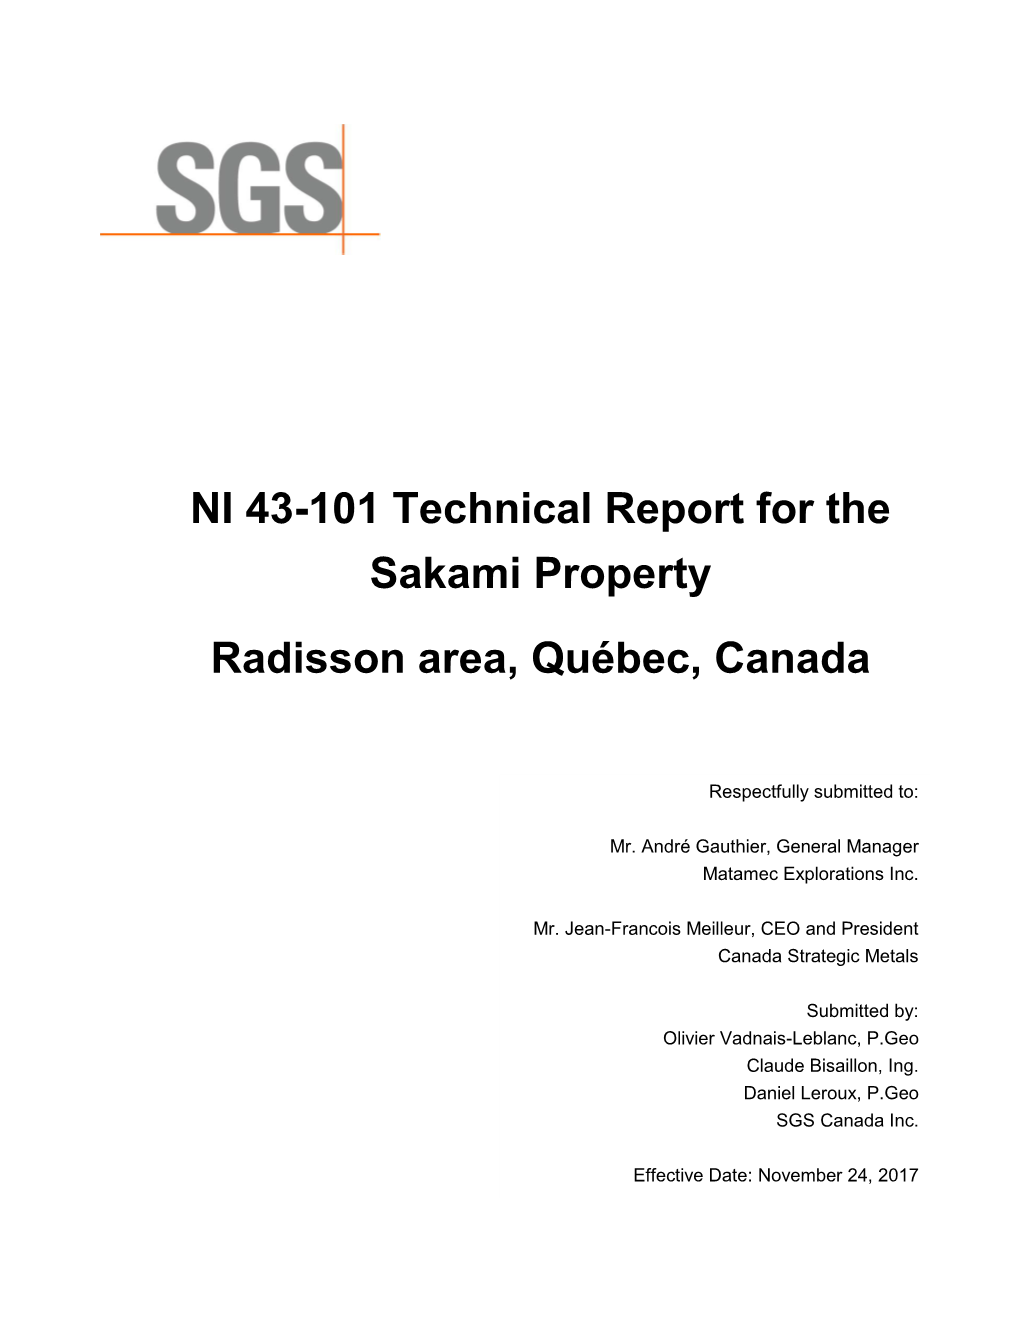 NI 43-101 Technical Report for the Sakami Property Radisson Area, Québec, Canada